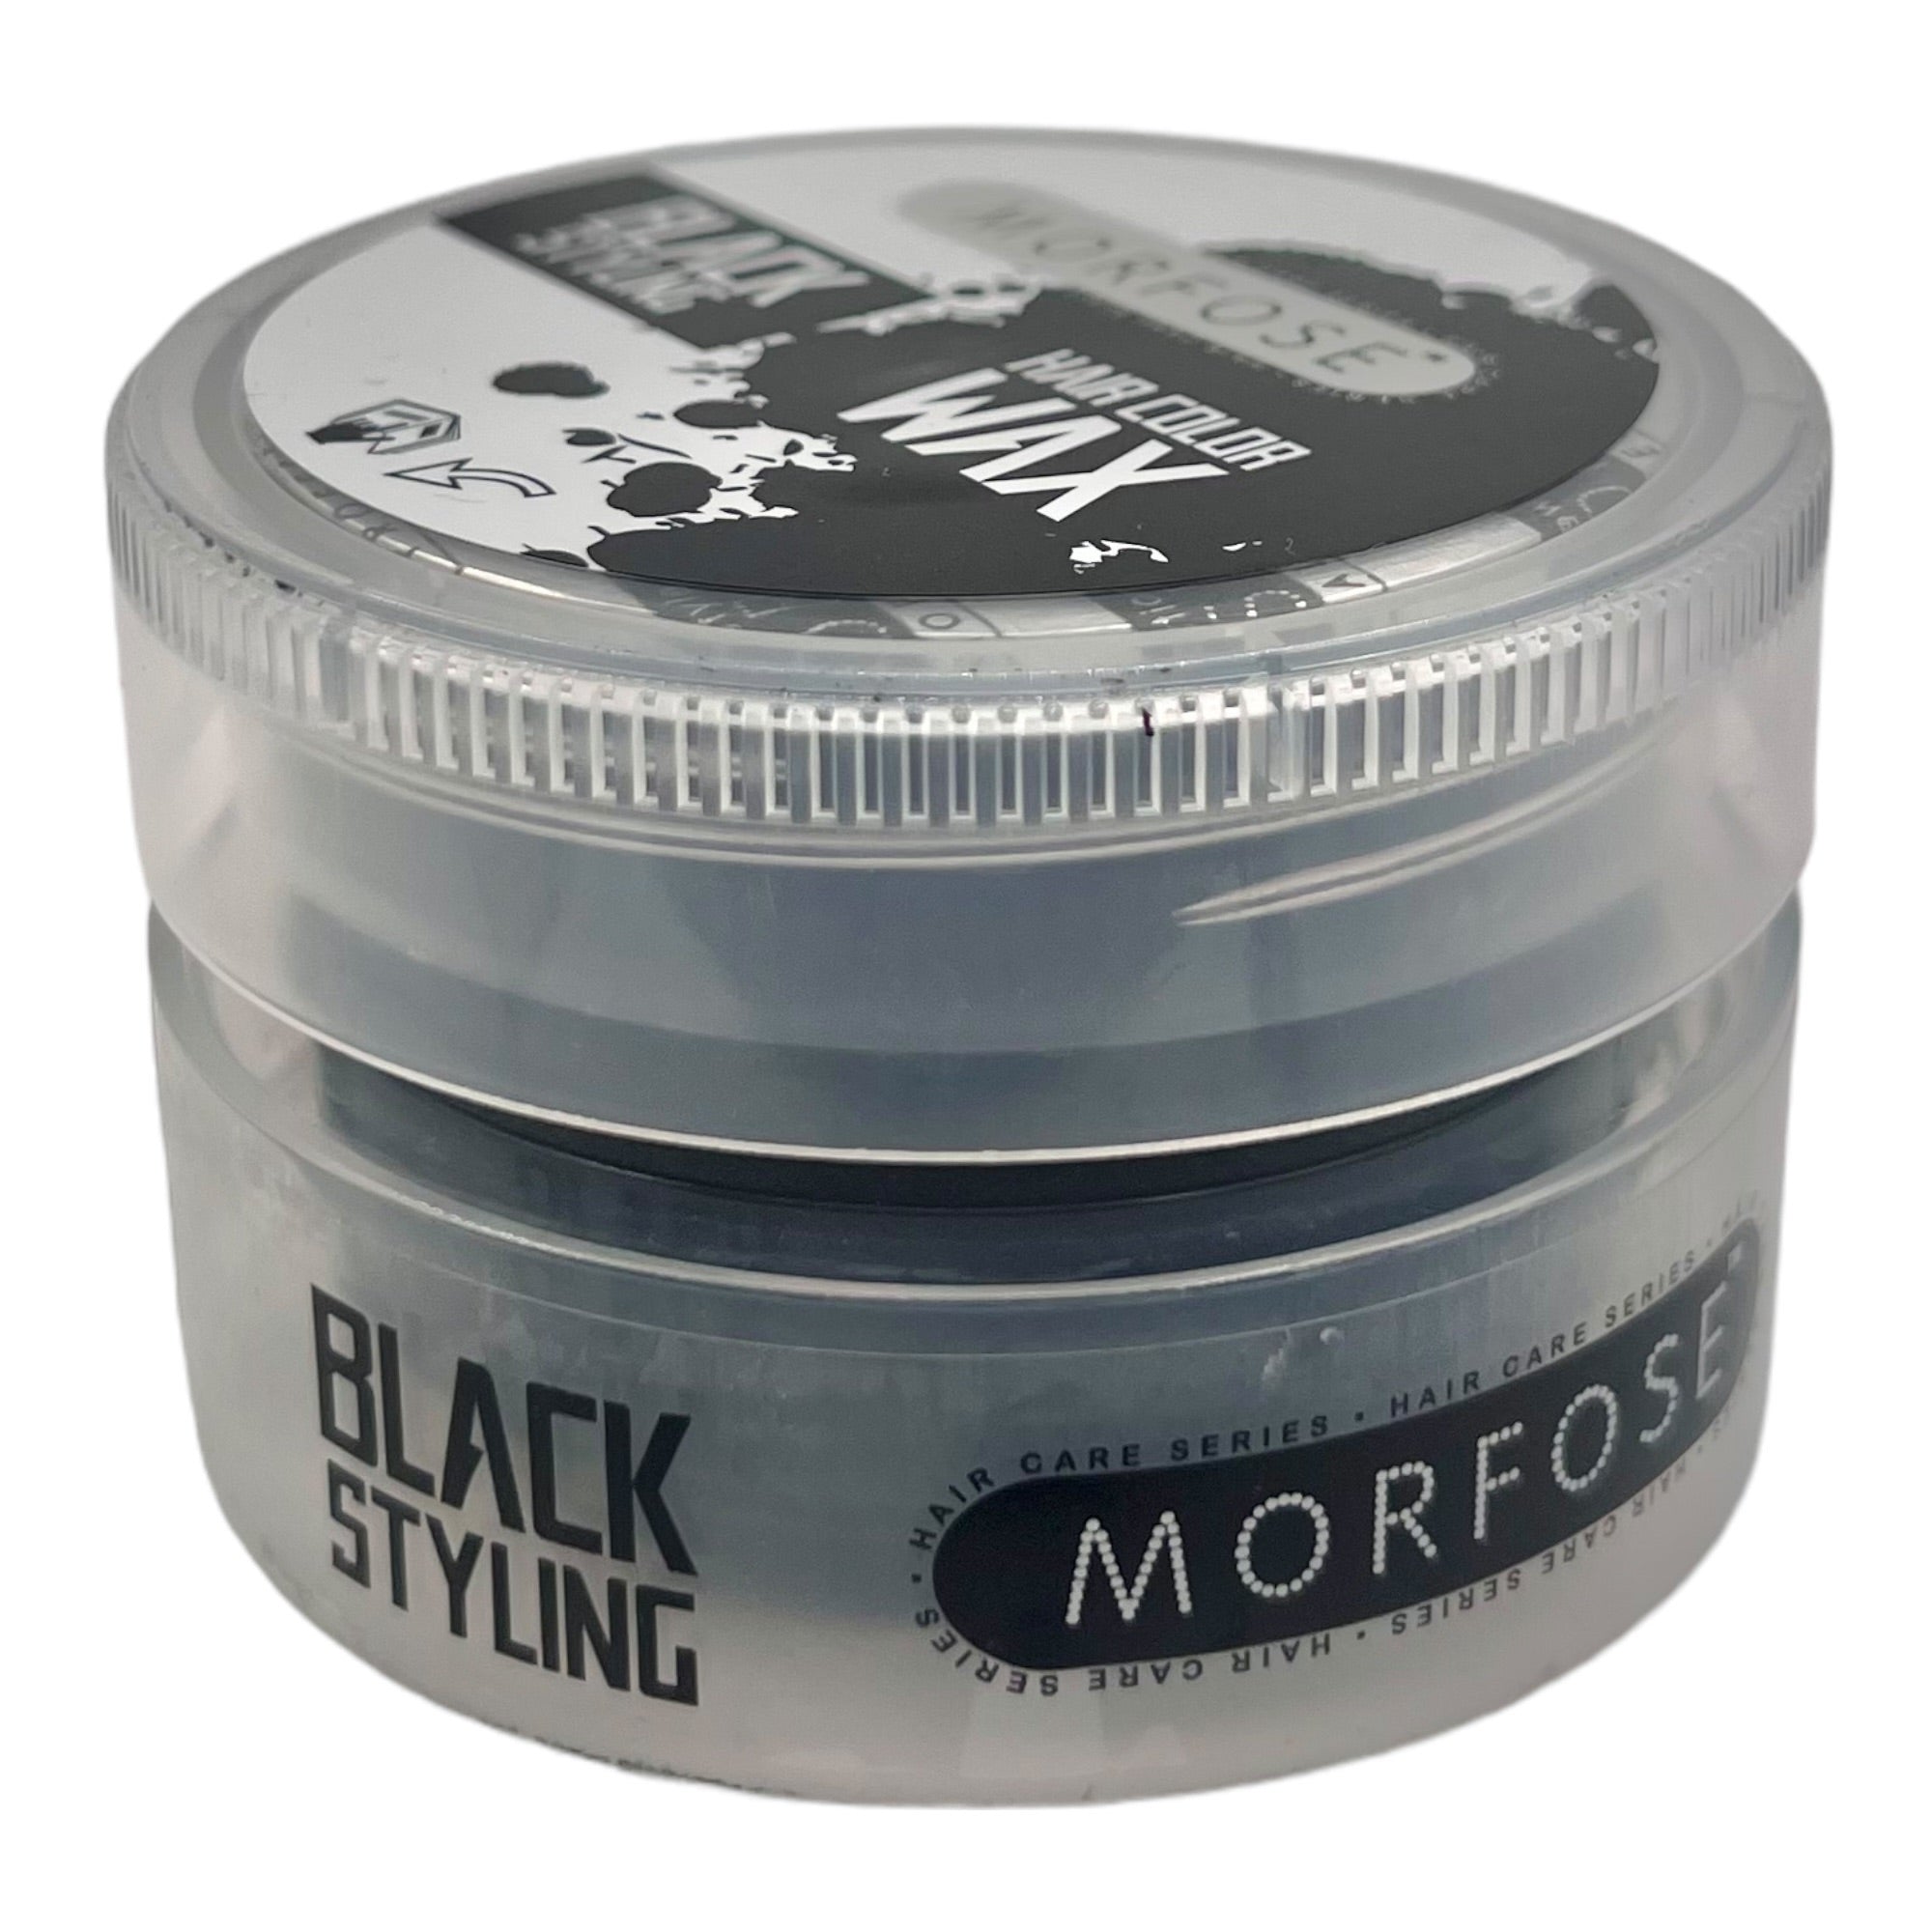 Morfose - Hair Colour Wax Black Styling 100ml